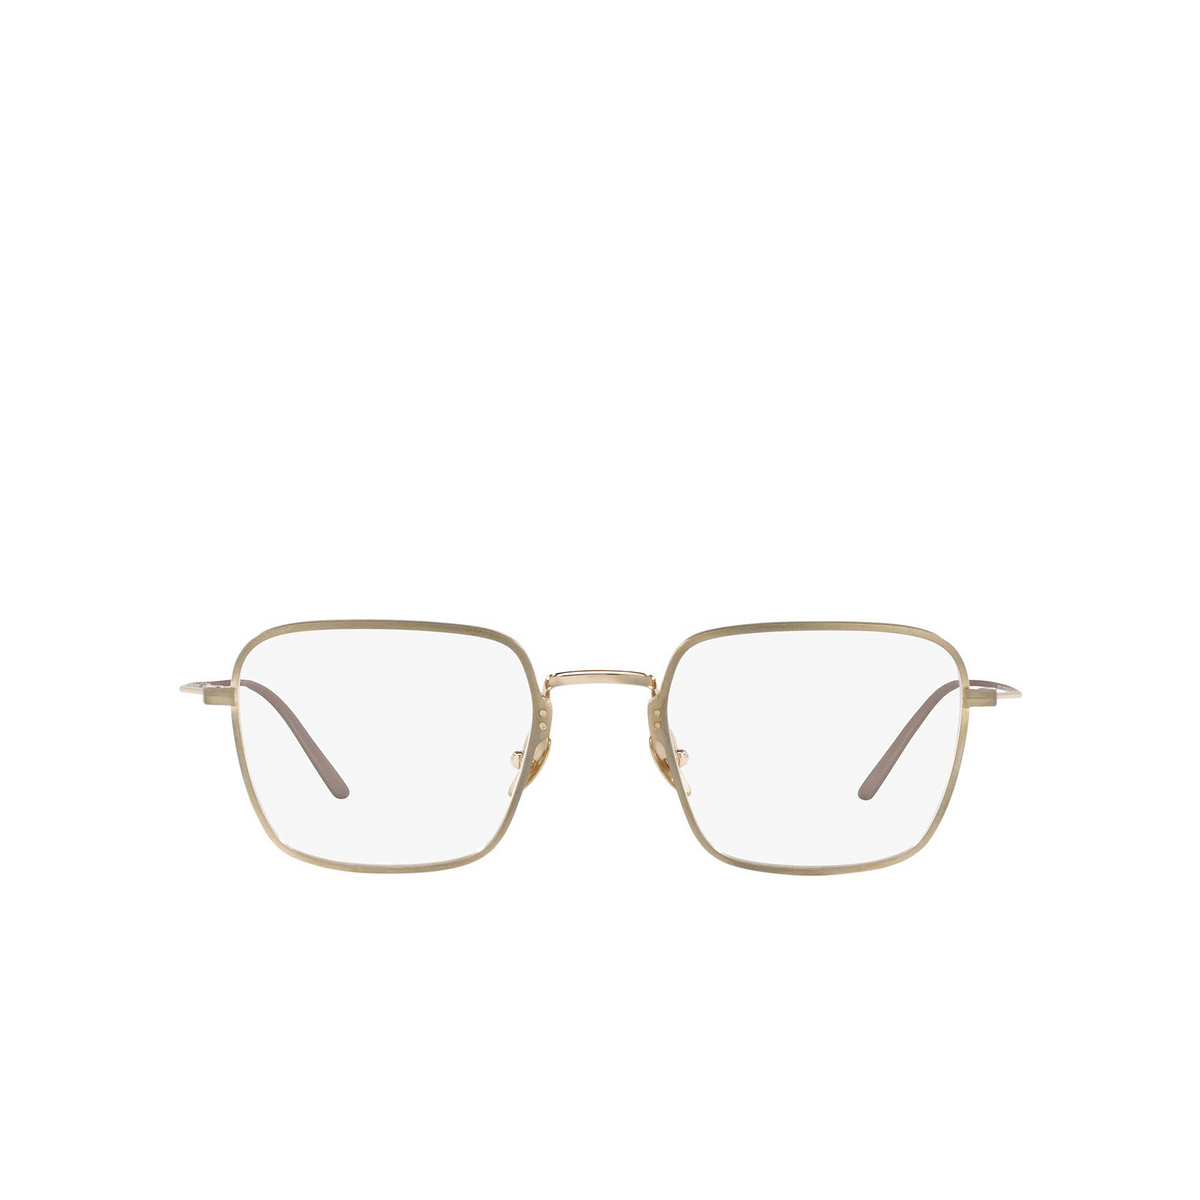 Prada® Square Eyeglasses: PR 51YV color Satin Pale Gold 06Q1O1 - front view.